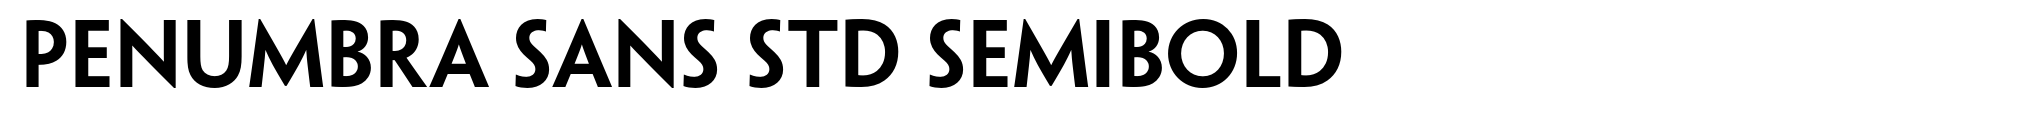 Penumbra Sans Std SemiBold image